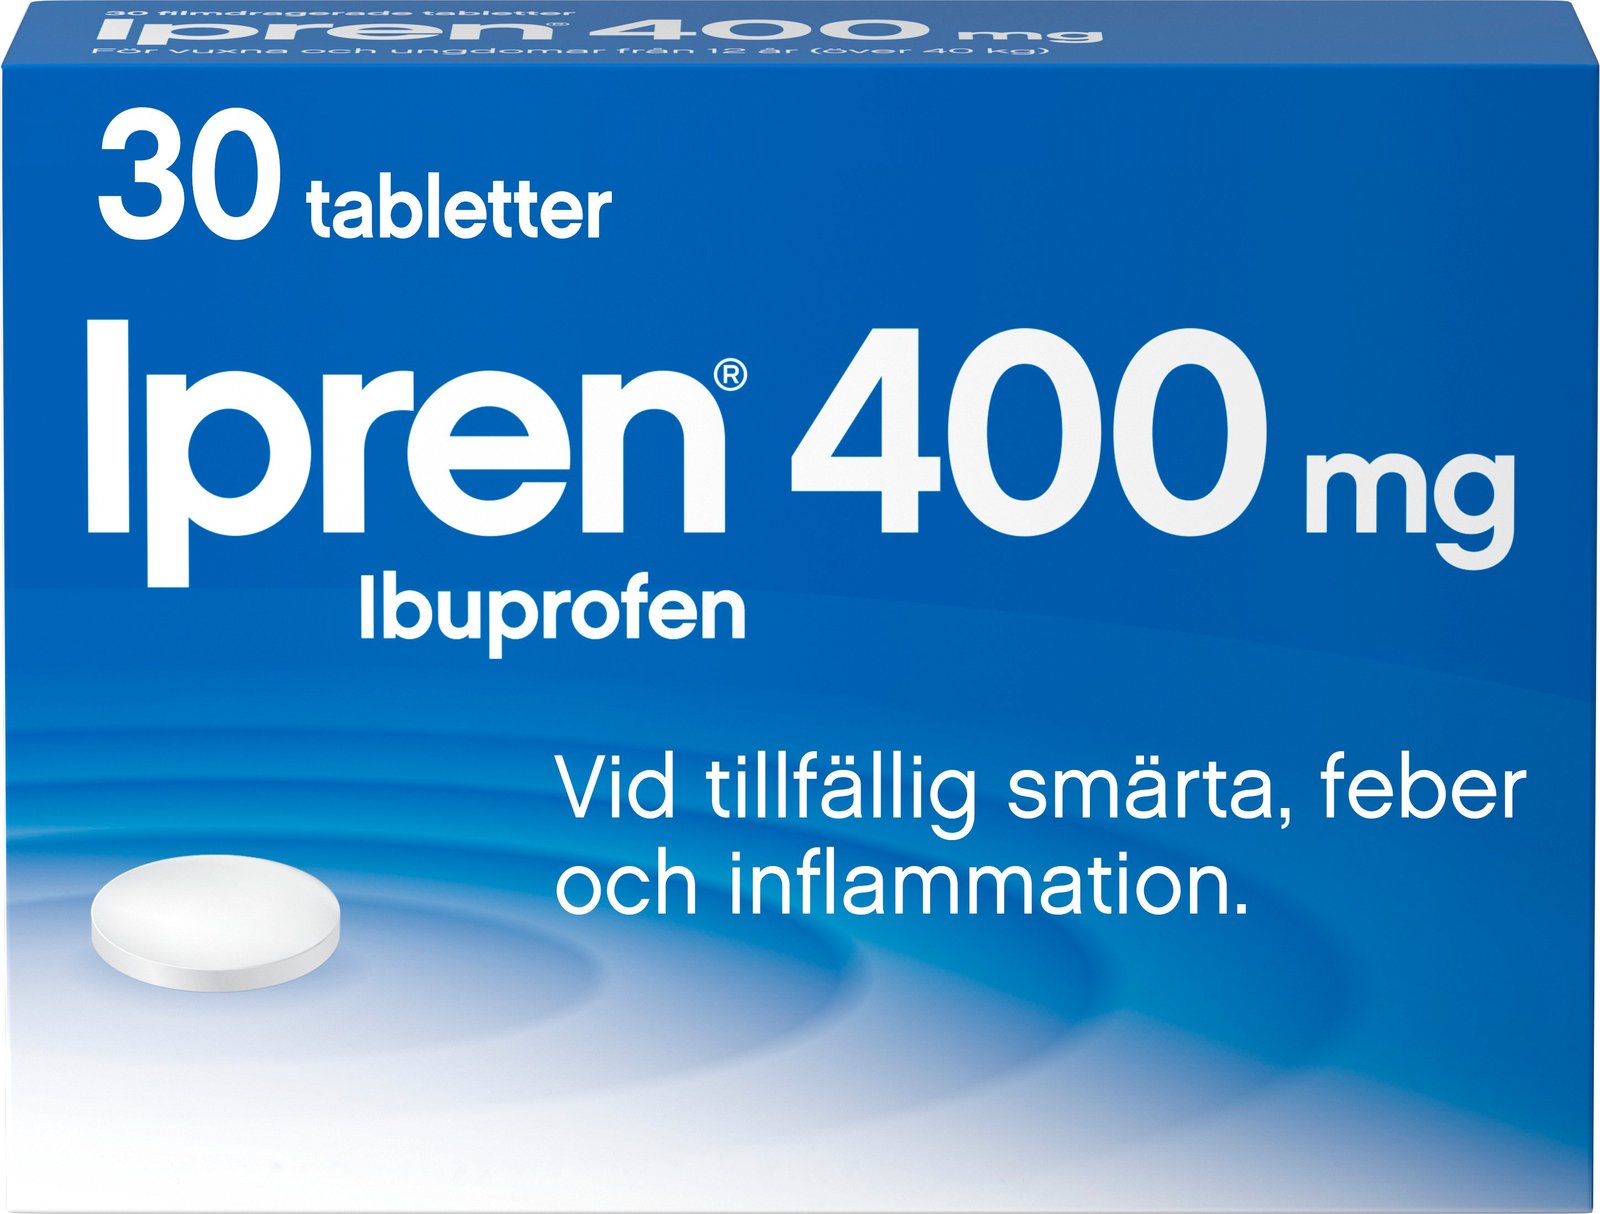 Ipren 400mg Ibuprofen 30 tabletter